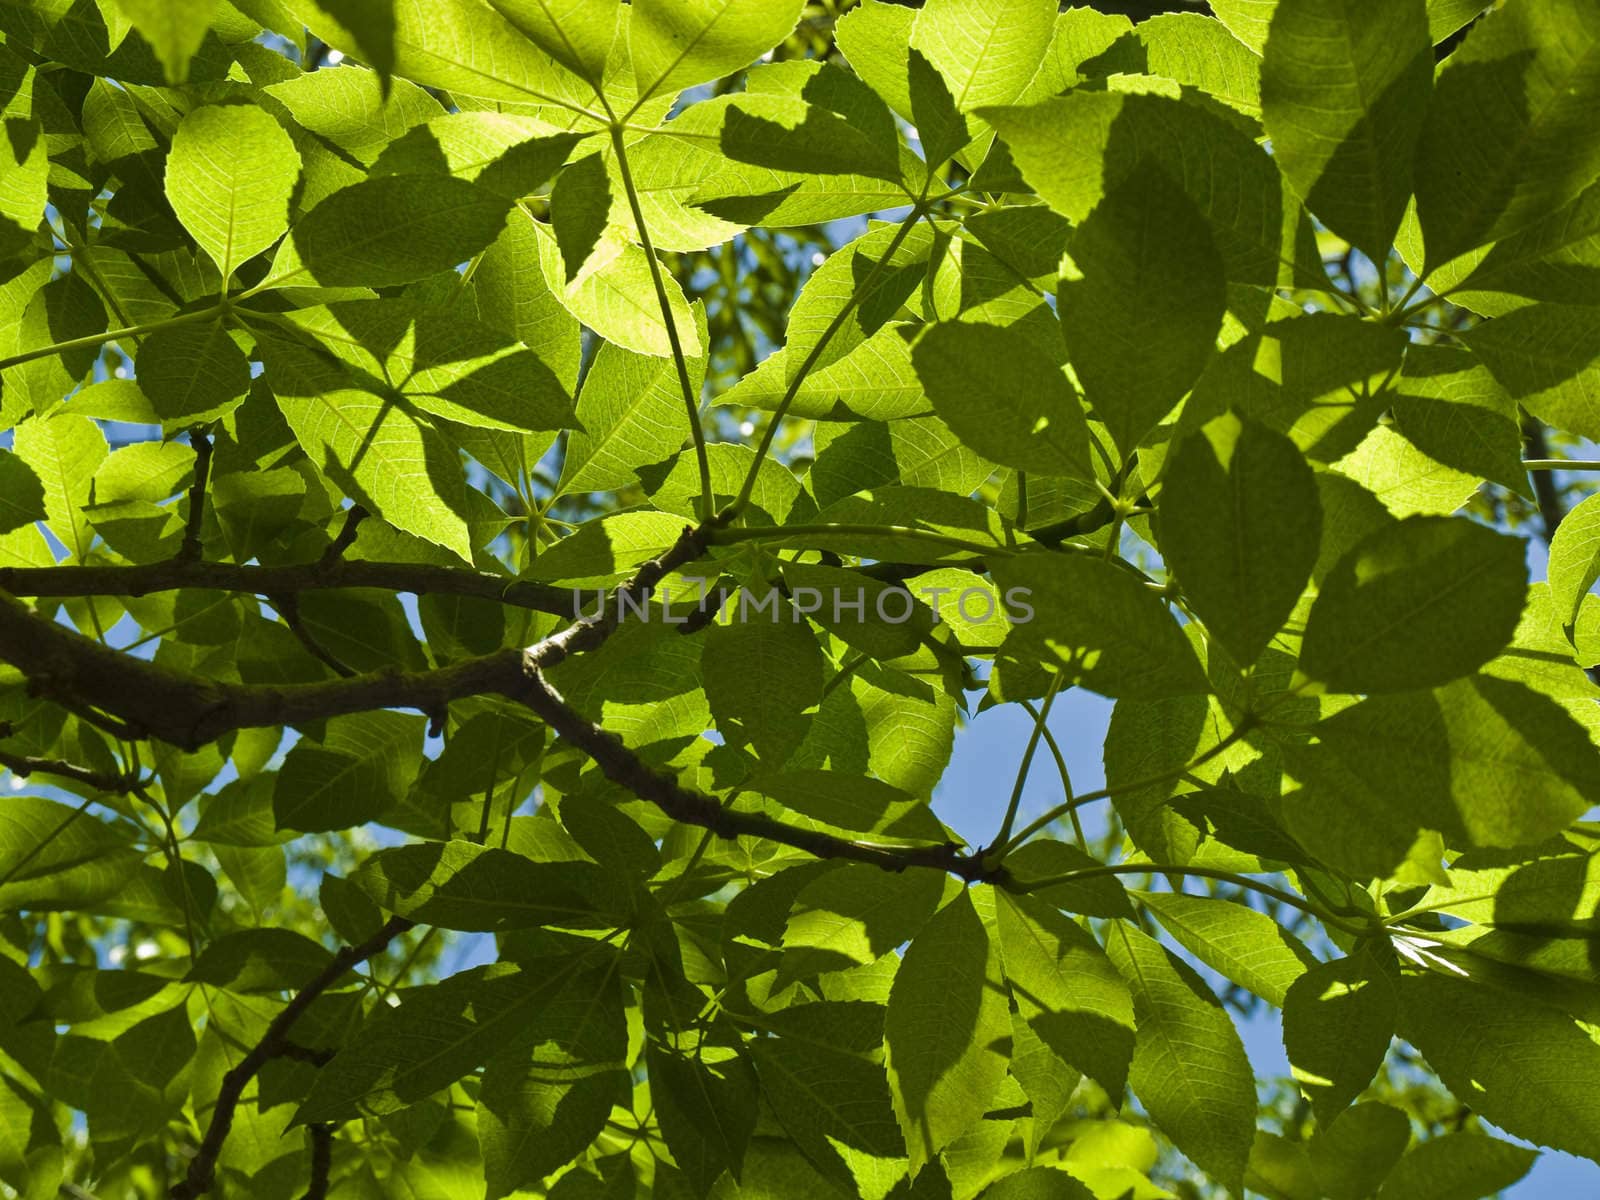 Vivid green foliage agaist blue sky